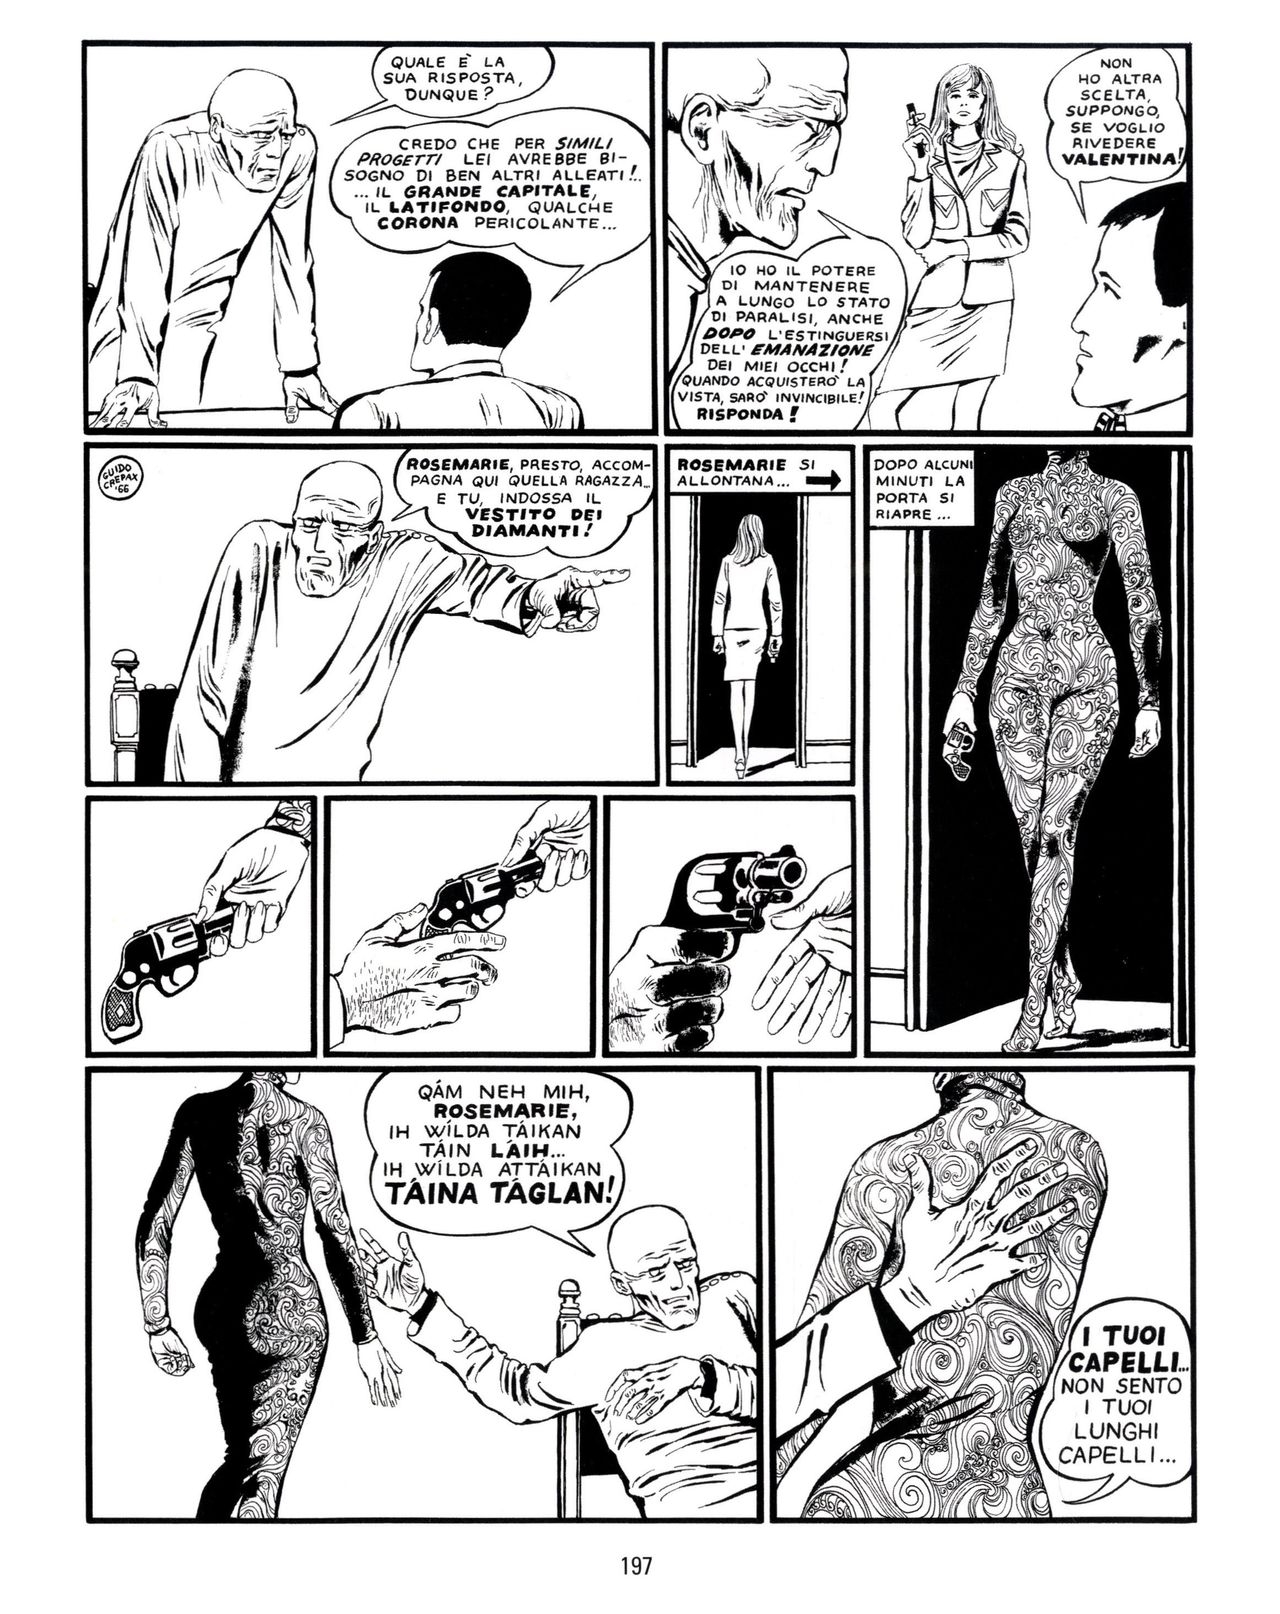 [Guido Crepax] Erotica Fumetti #25 : L'ascesa dei sotterranei : I cavalieri ciechi [Italian] 198